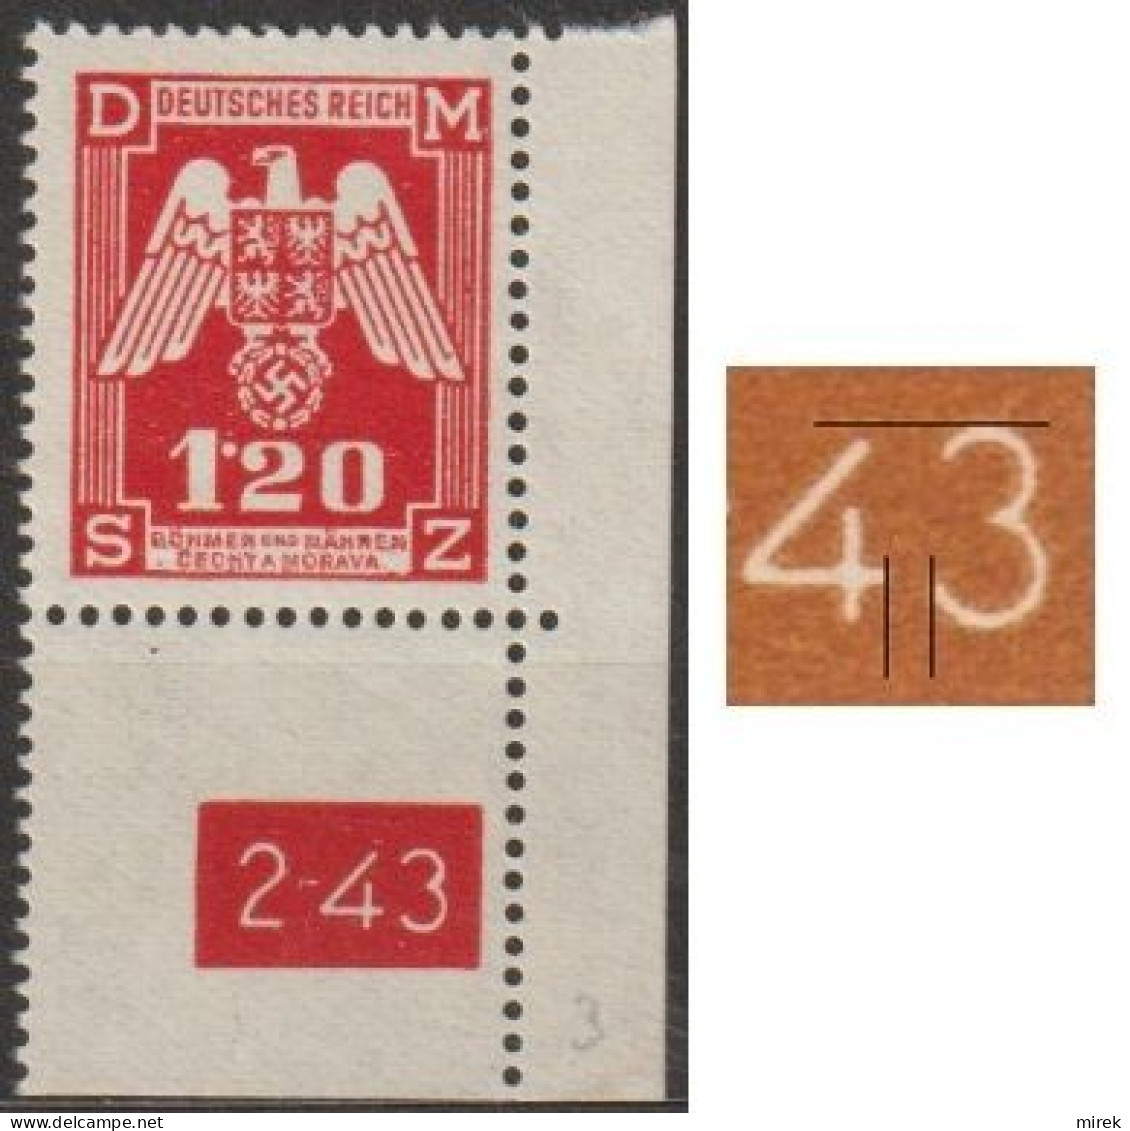 026a/ Pof. SL 19, Corner Stamp, Plate Number 2-43, Type 2, Var. 3 - Unused Stamps